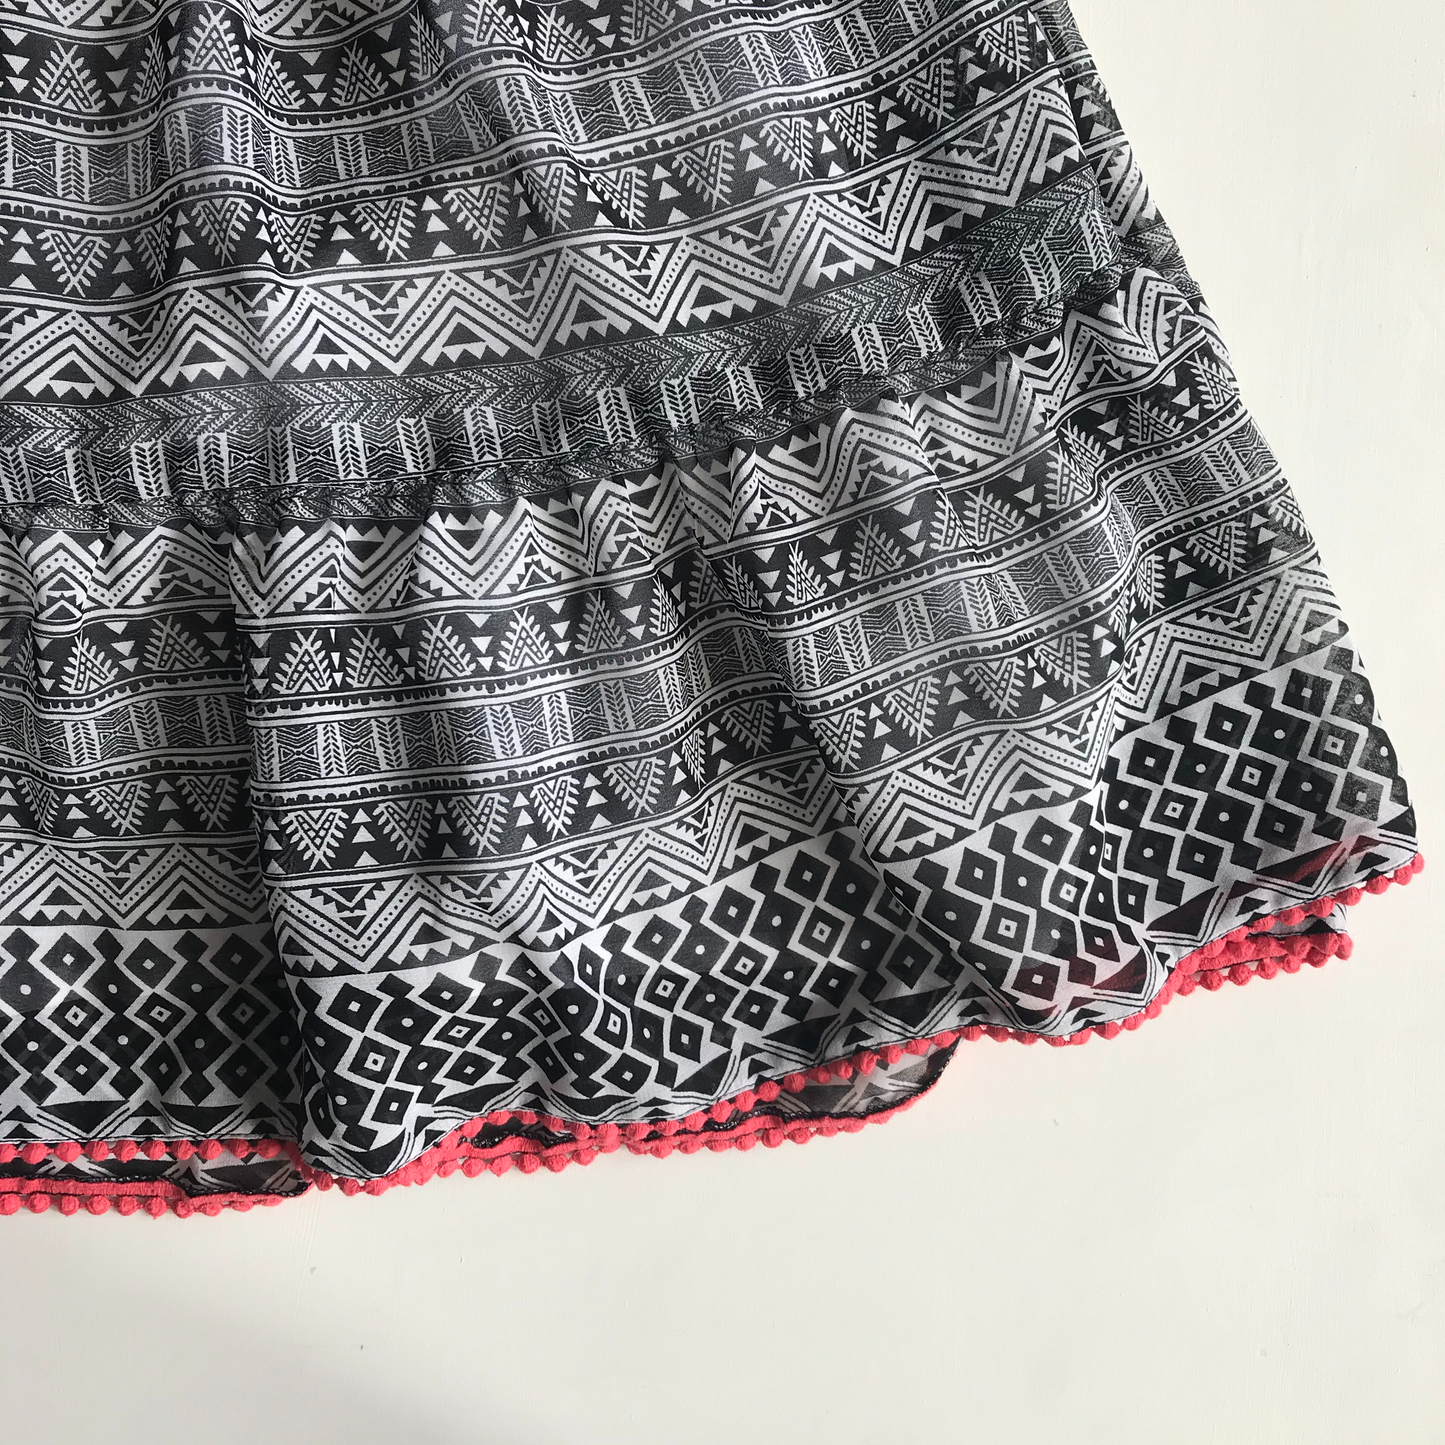 Dress - Maxi, Grey Pattern & Pink Details - Age 6